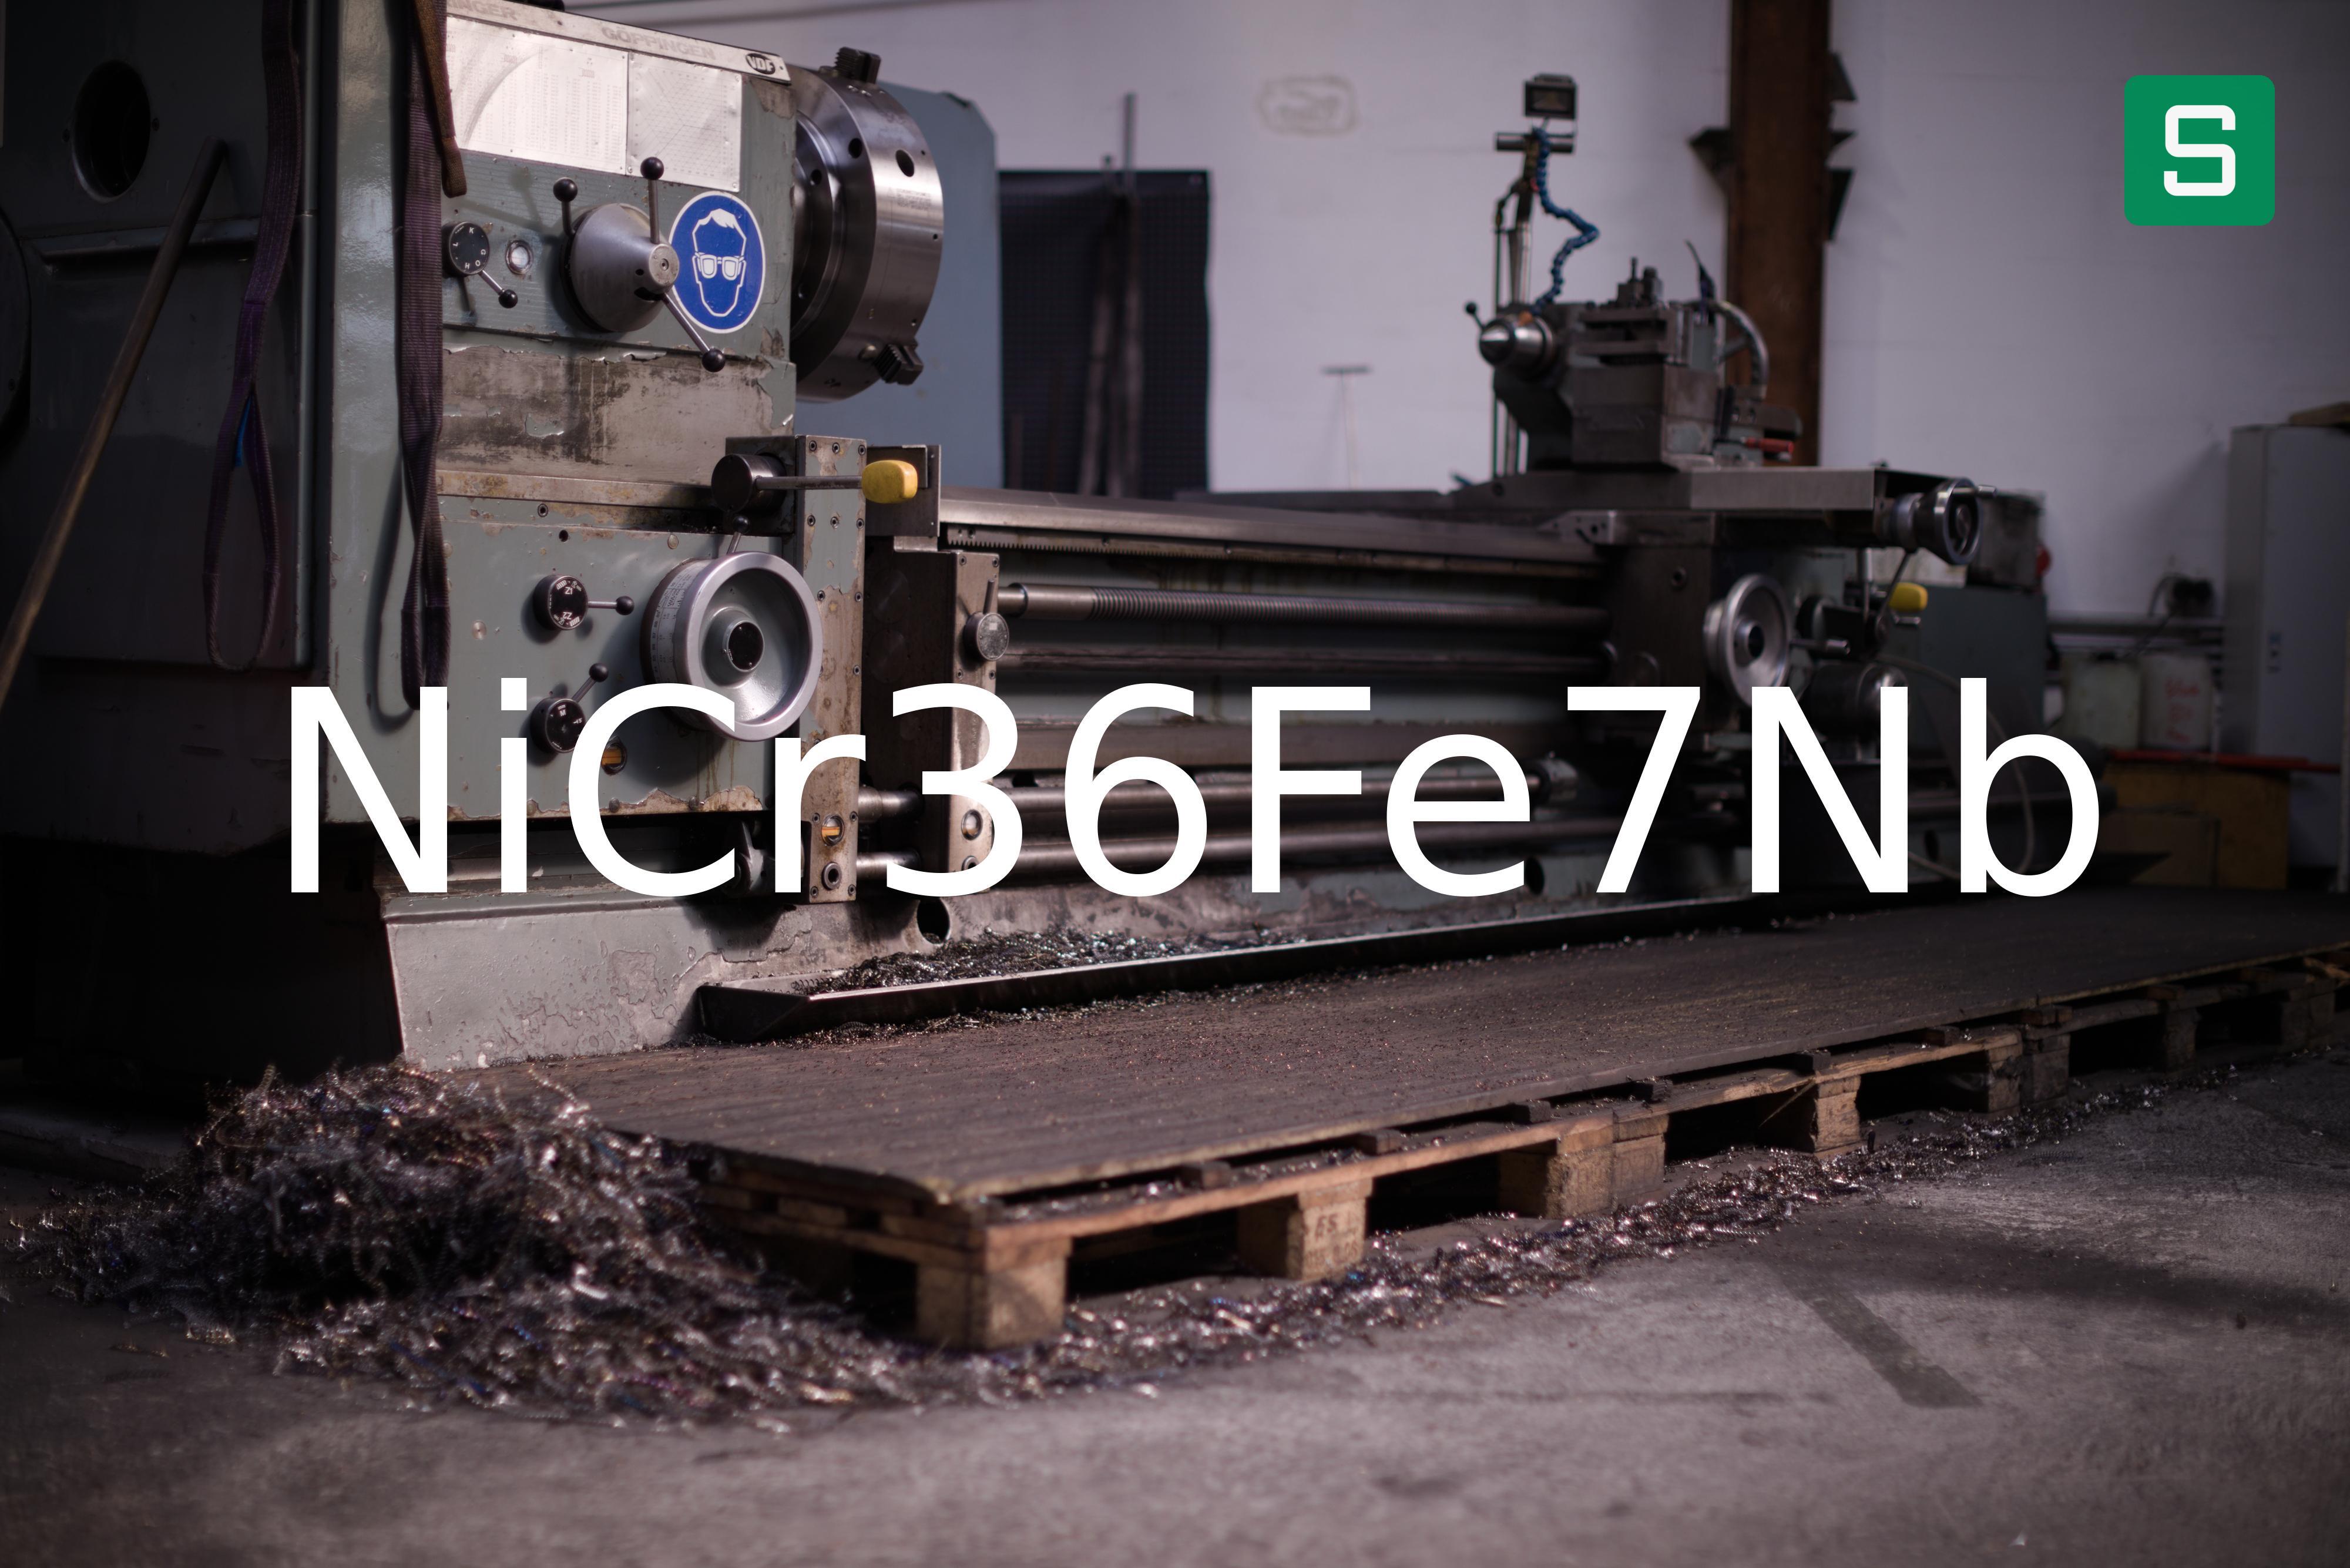 Steel Material: NiCr36Fe7Nb